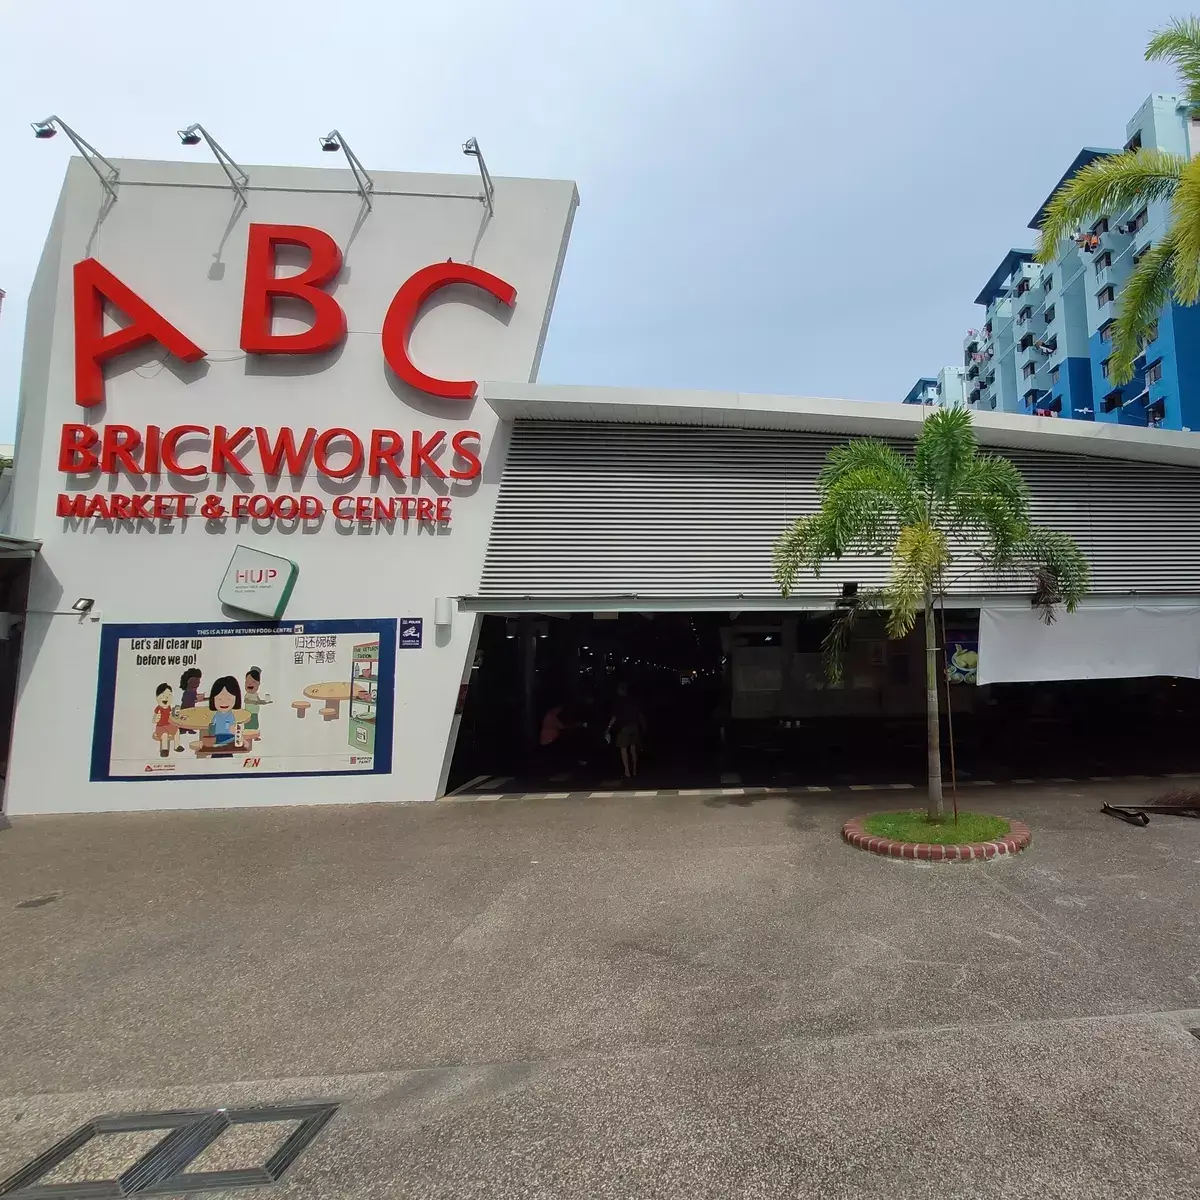 Guide: ABC Brickworks Food Centre (Singapore)